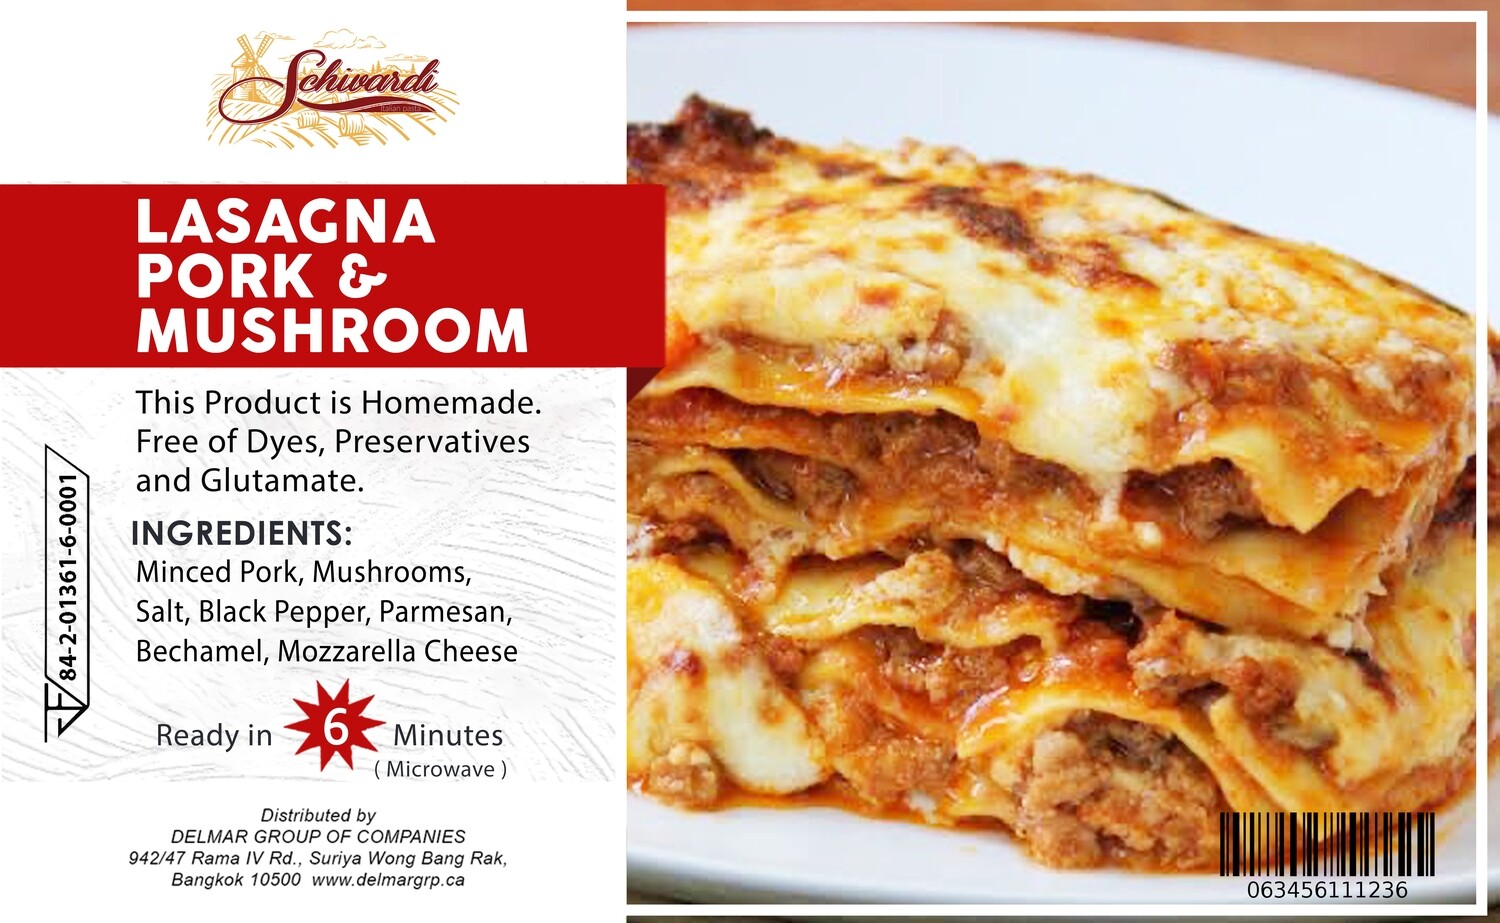 Pork & Mushroom Lasagna